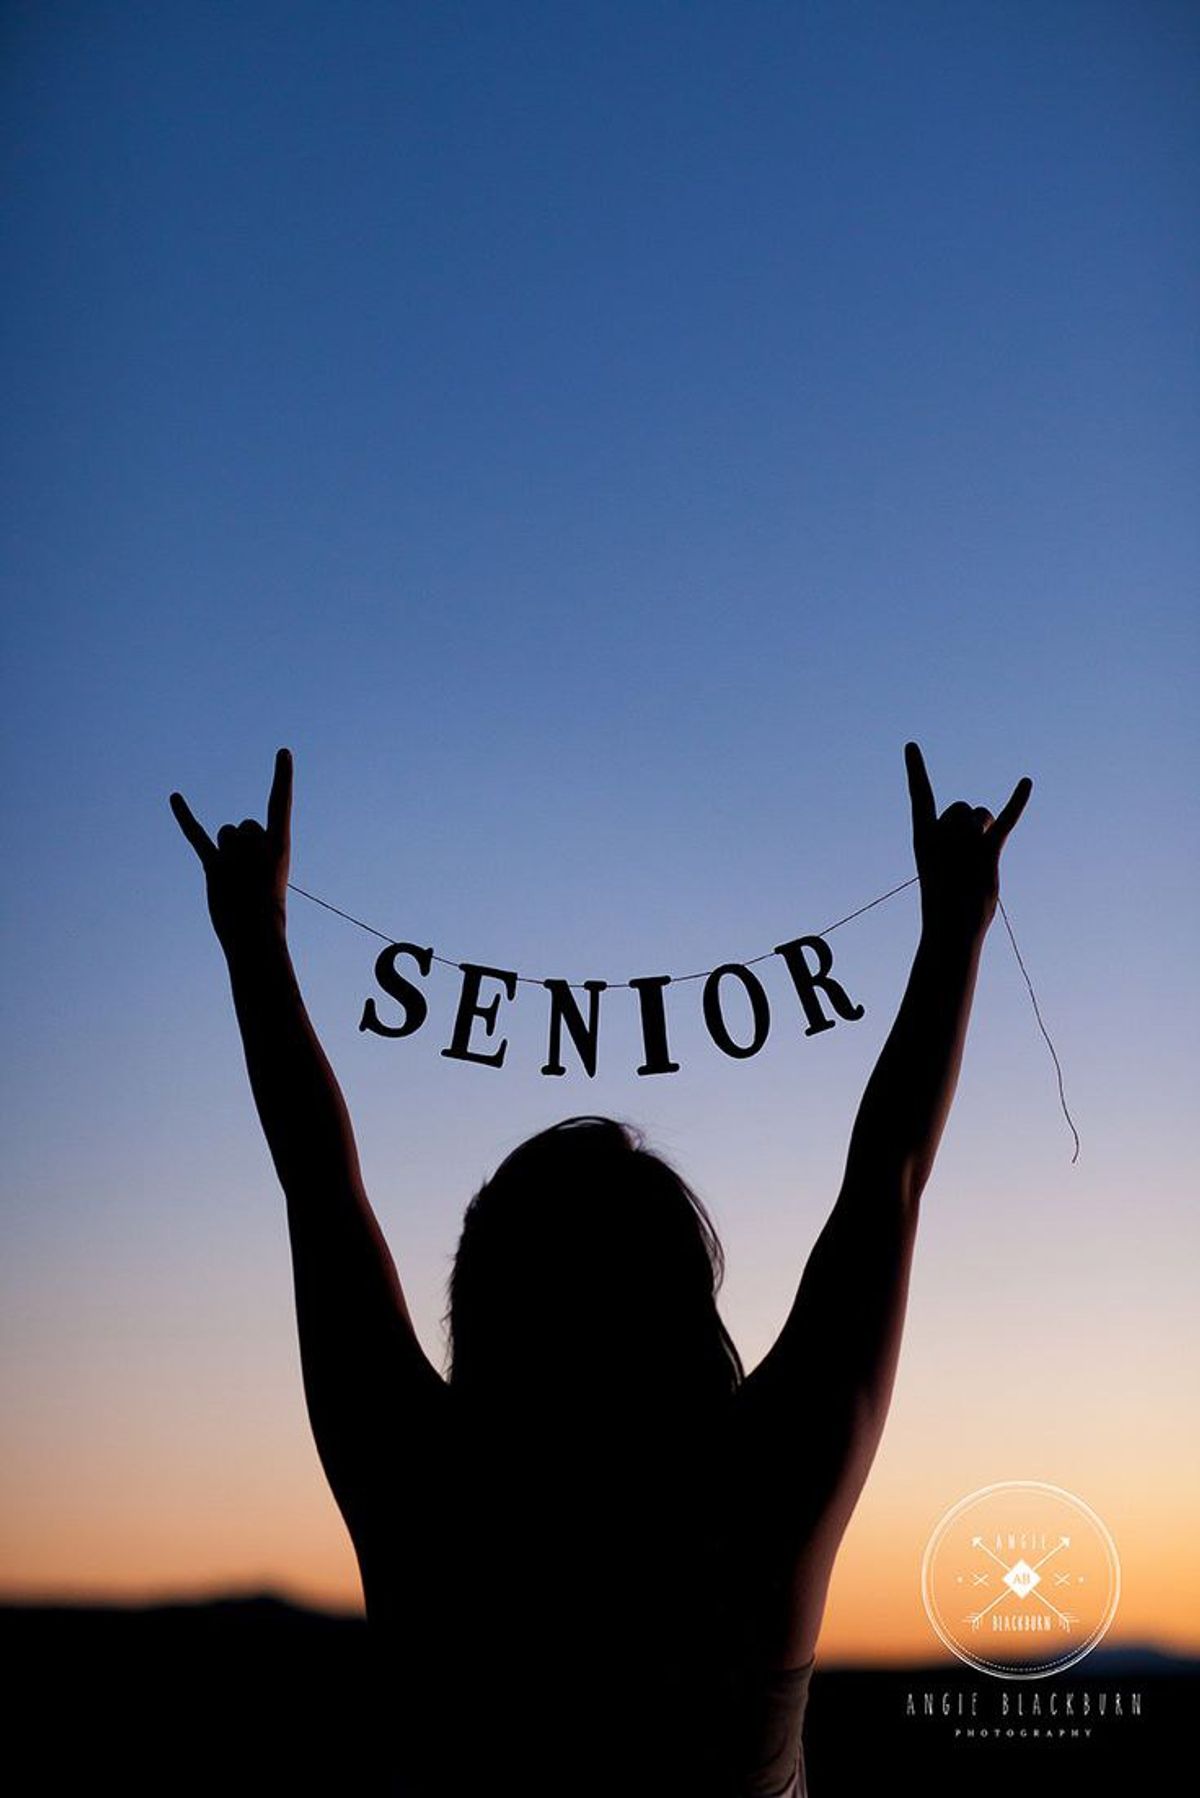 5 Tips To Having The Best Senior Year